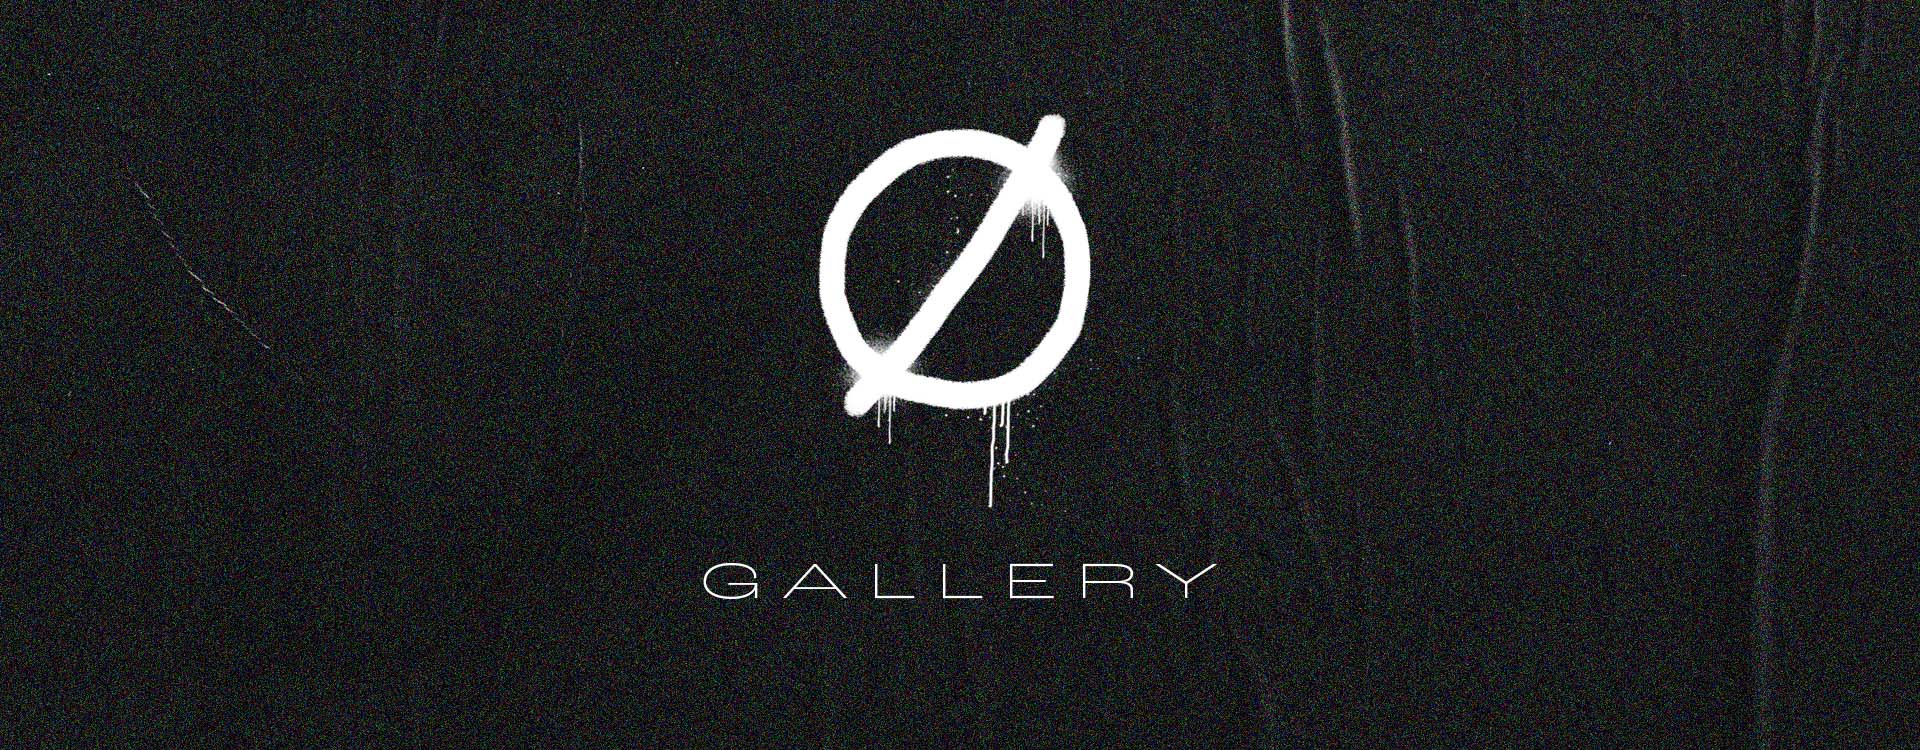 Gallery Ø